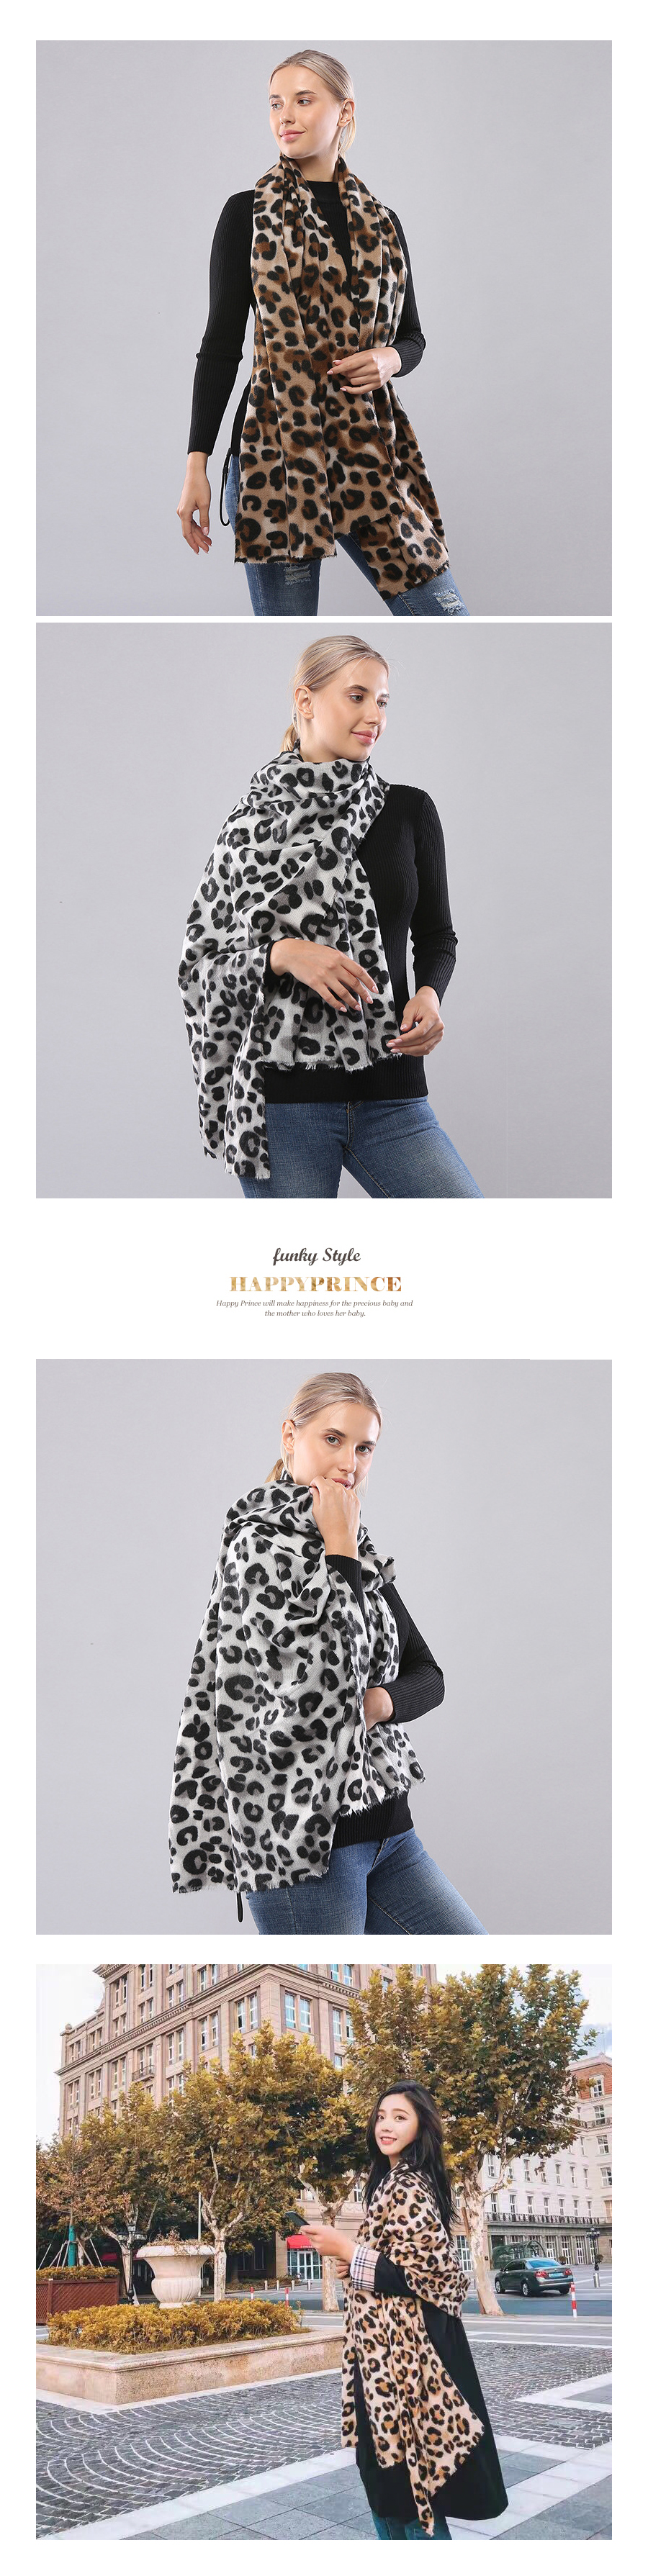 Fashion Leopard-7 Leopard Print Scarf,Thin Scaves